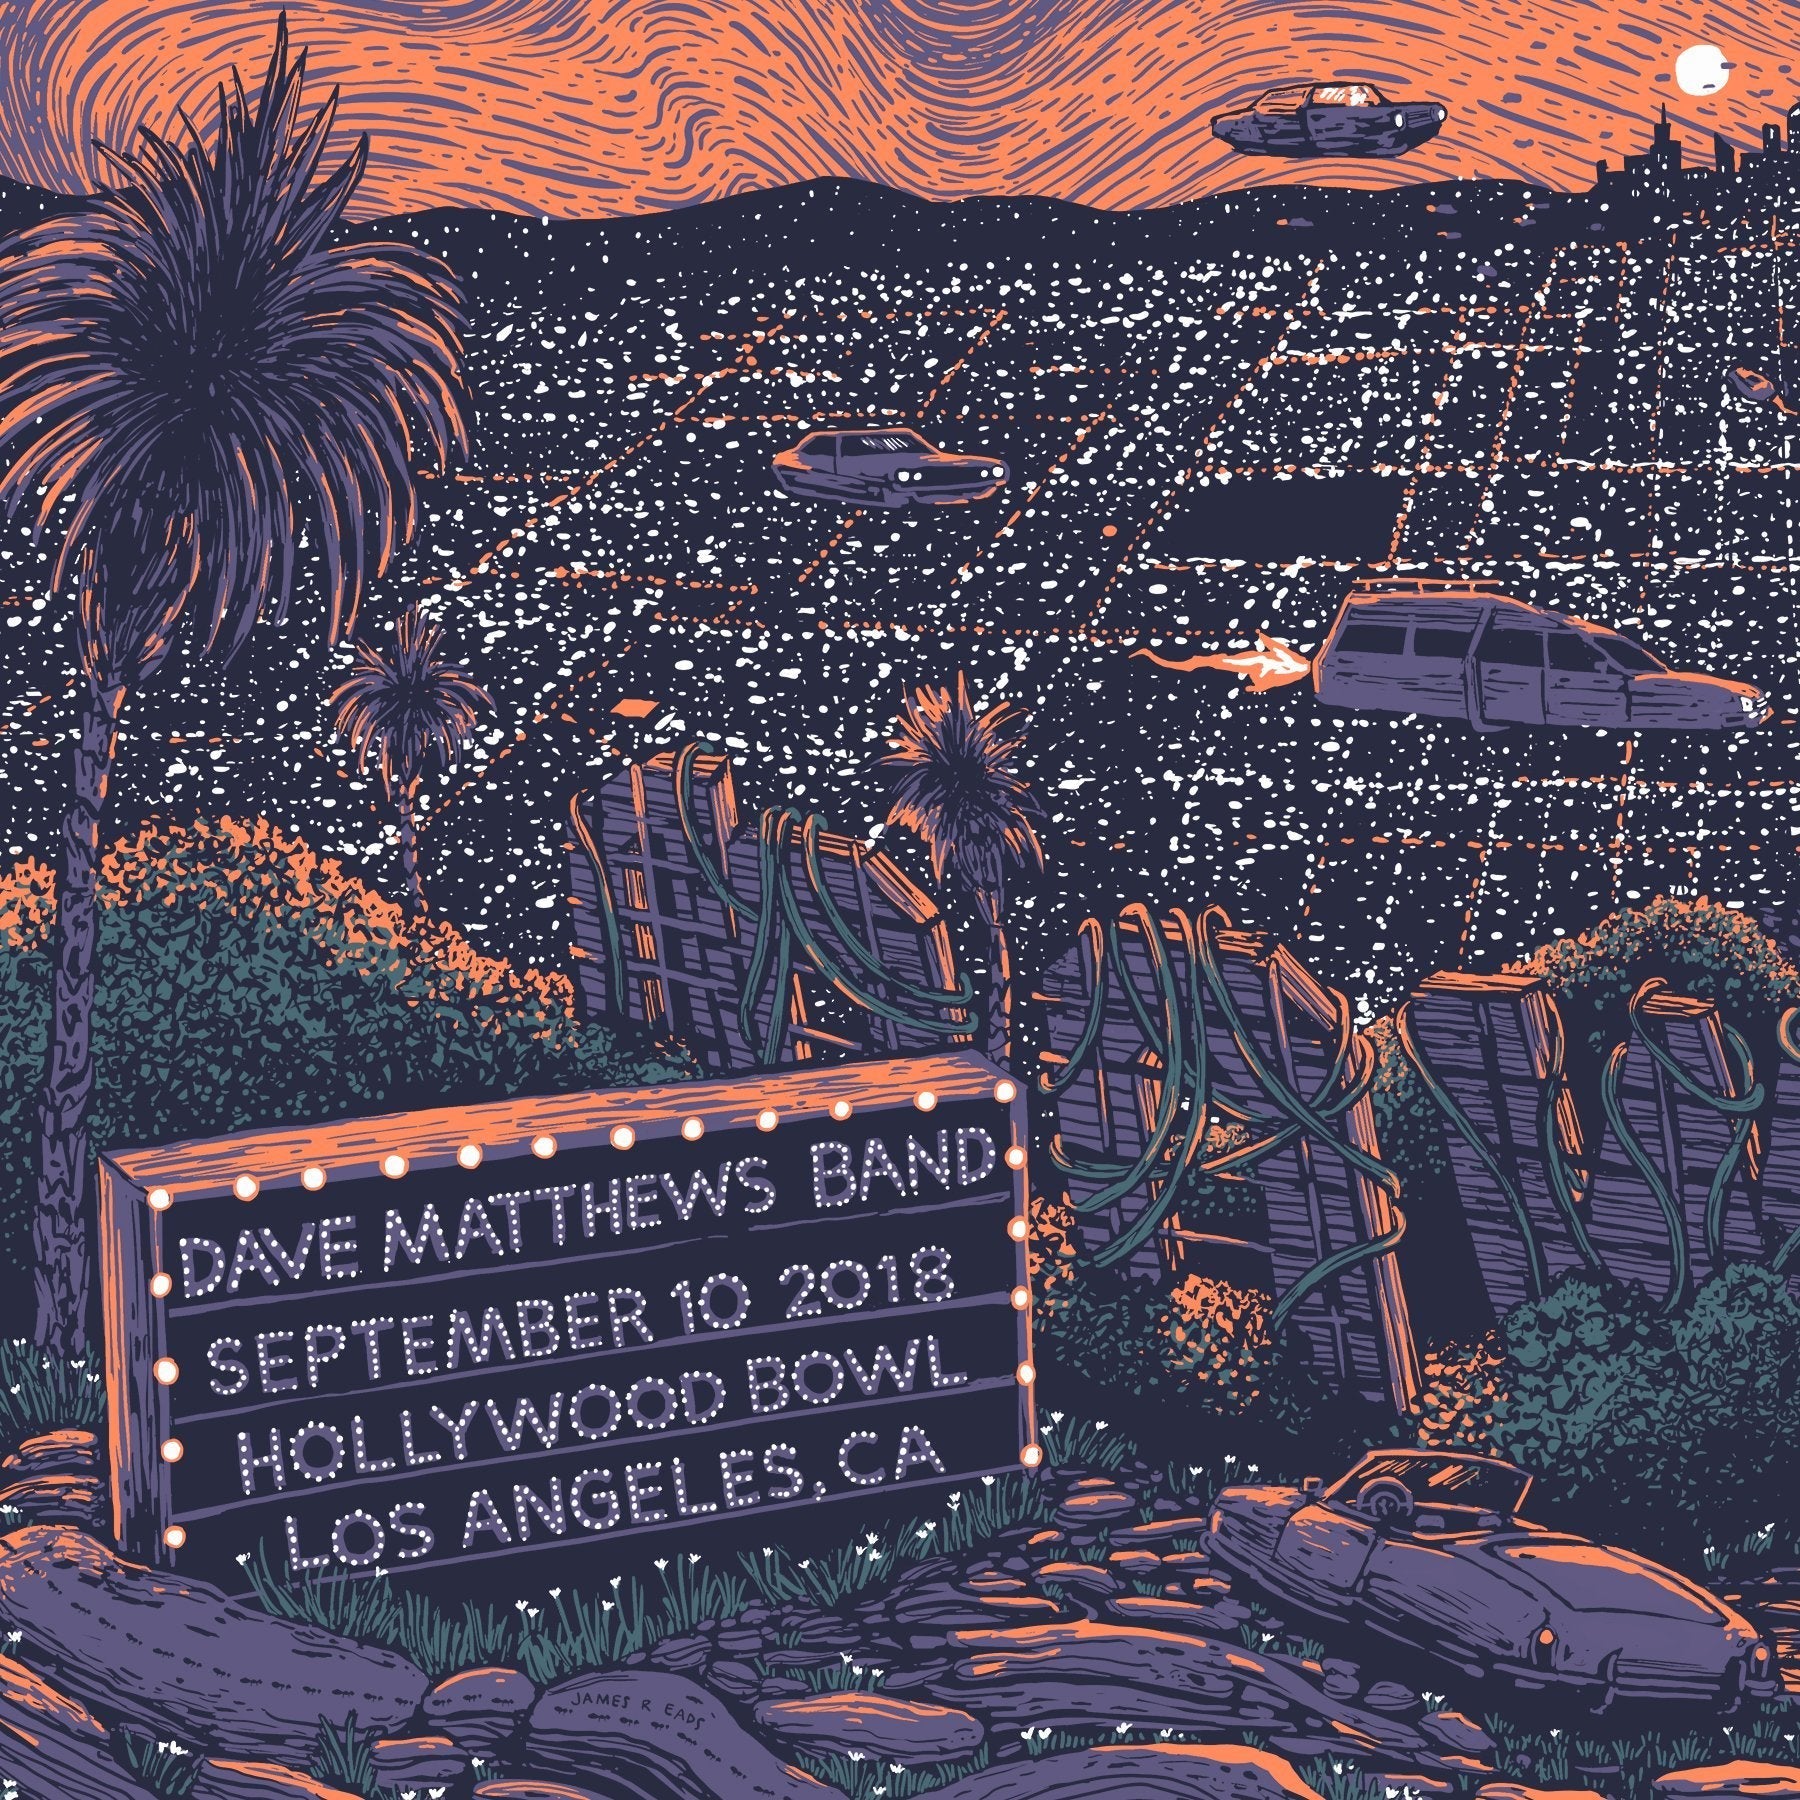 Dave Matthews Band LOS ANGELES 2018 (AP Edition of 120) Print James R. Eads